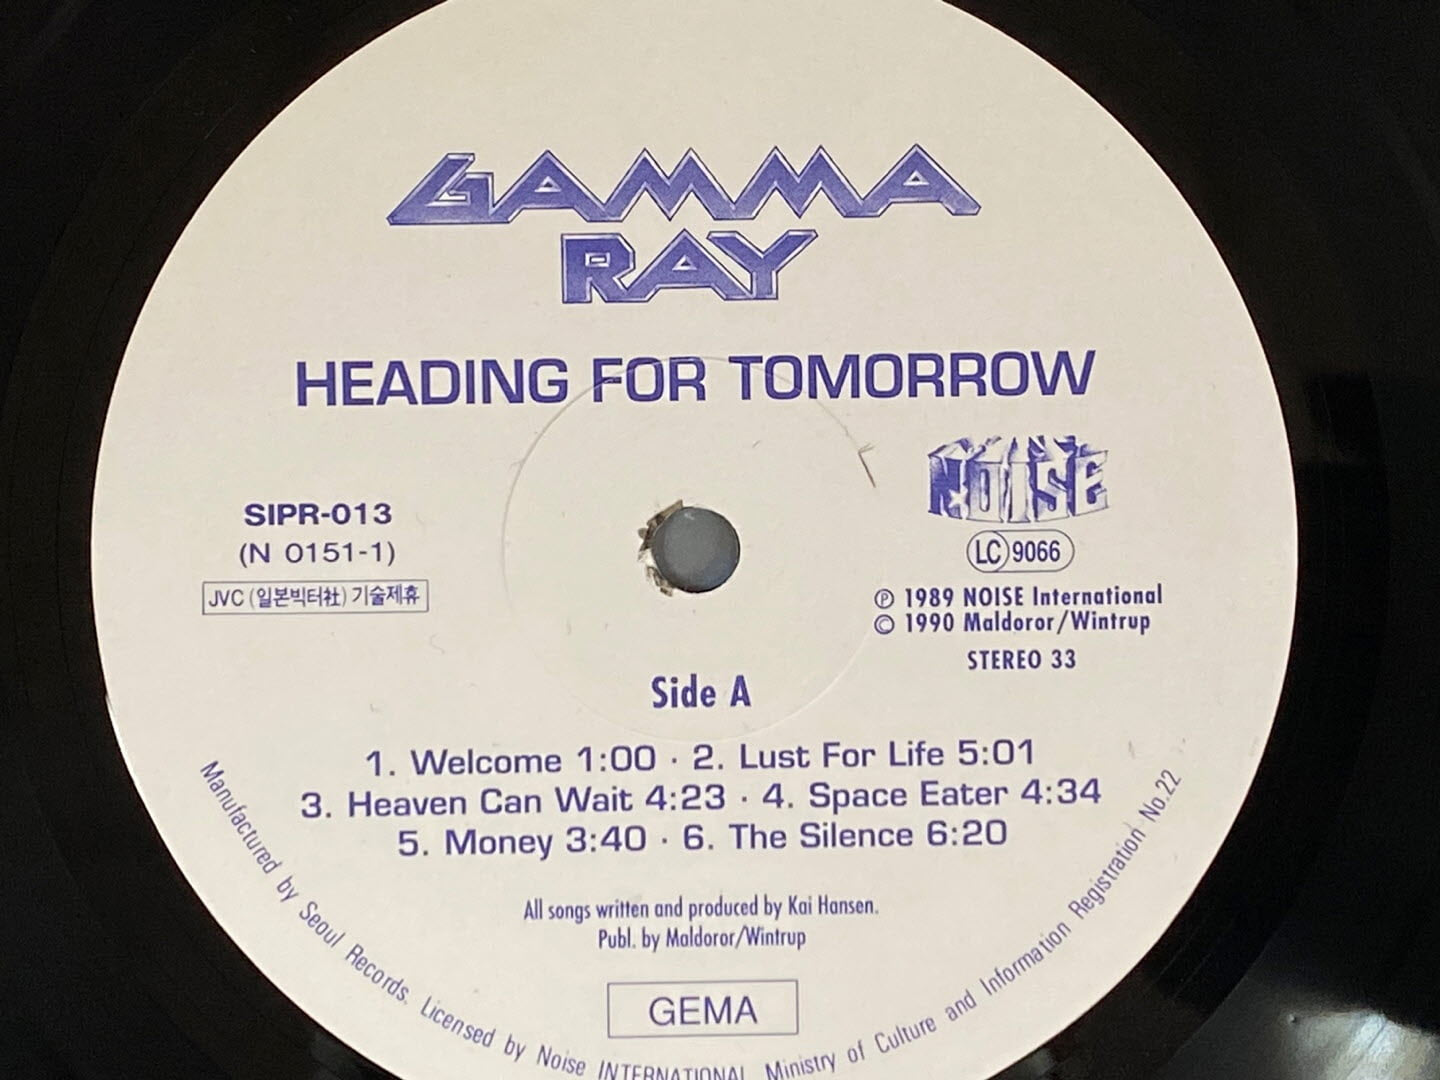 [LP] 감마 레이 - Gamma Ray - Heading For Tomorrow LP [서울-라이센스반]